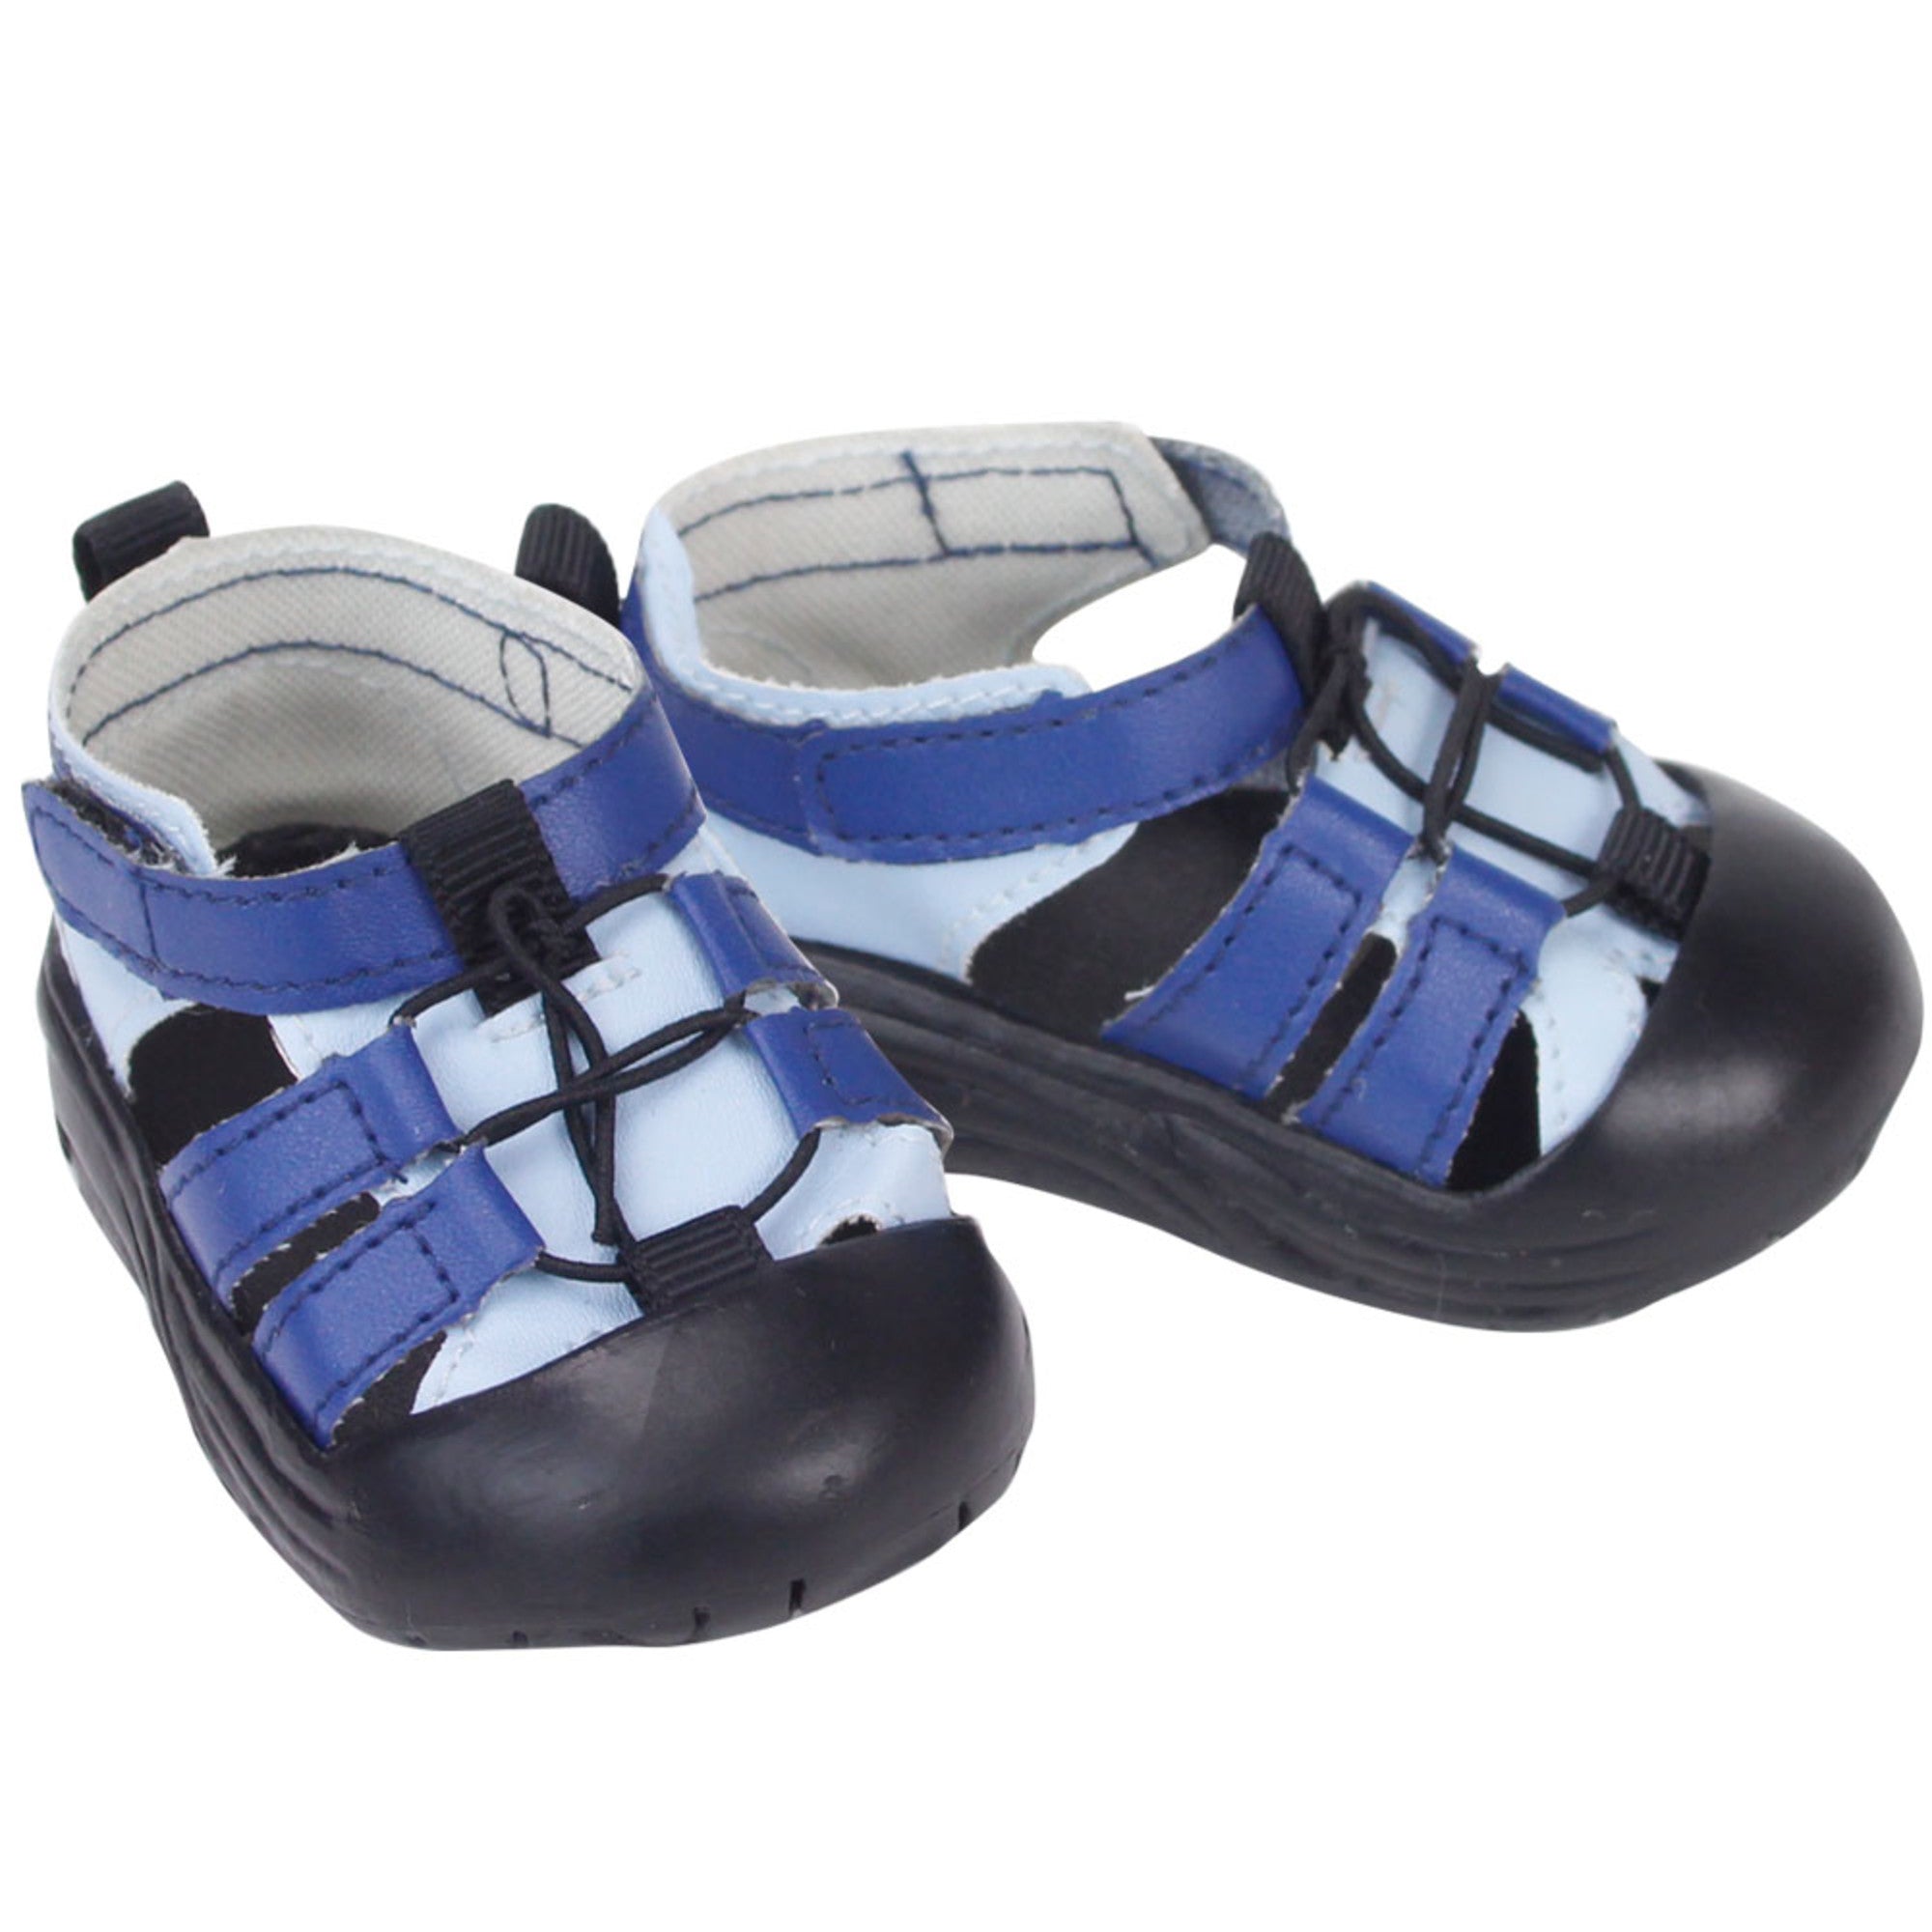 Sophia’s Outdoor Athletic Hiking Gender-Neutral Mix & Match Velcro Sandal Shoes for 18” Dolls, Blue/Black